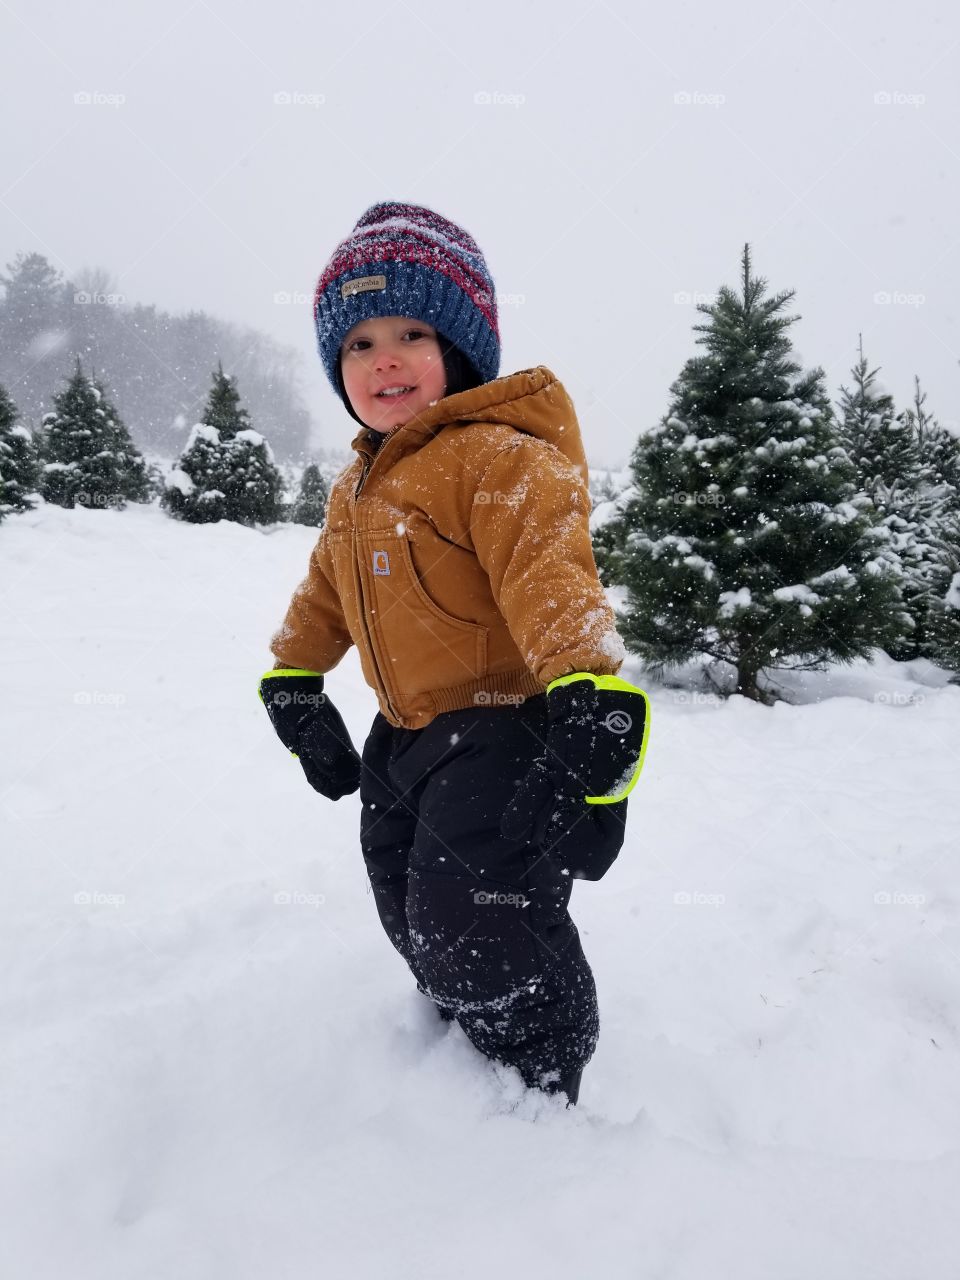 Snow, Winter, Cold, Child, Recreation